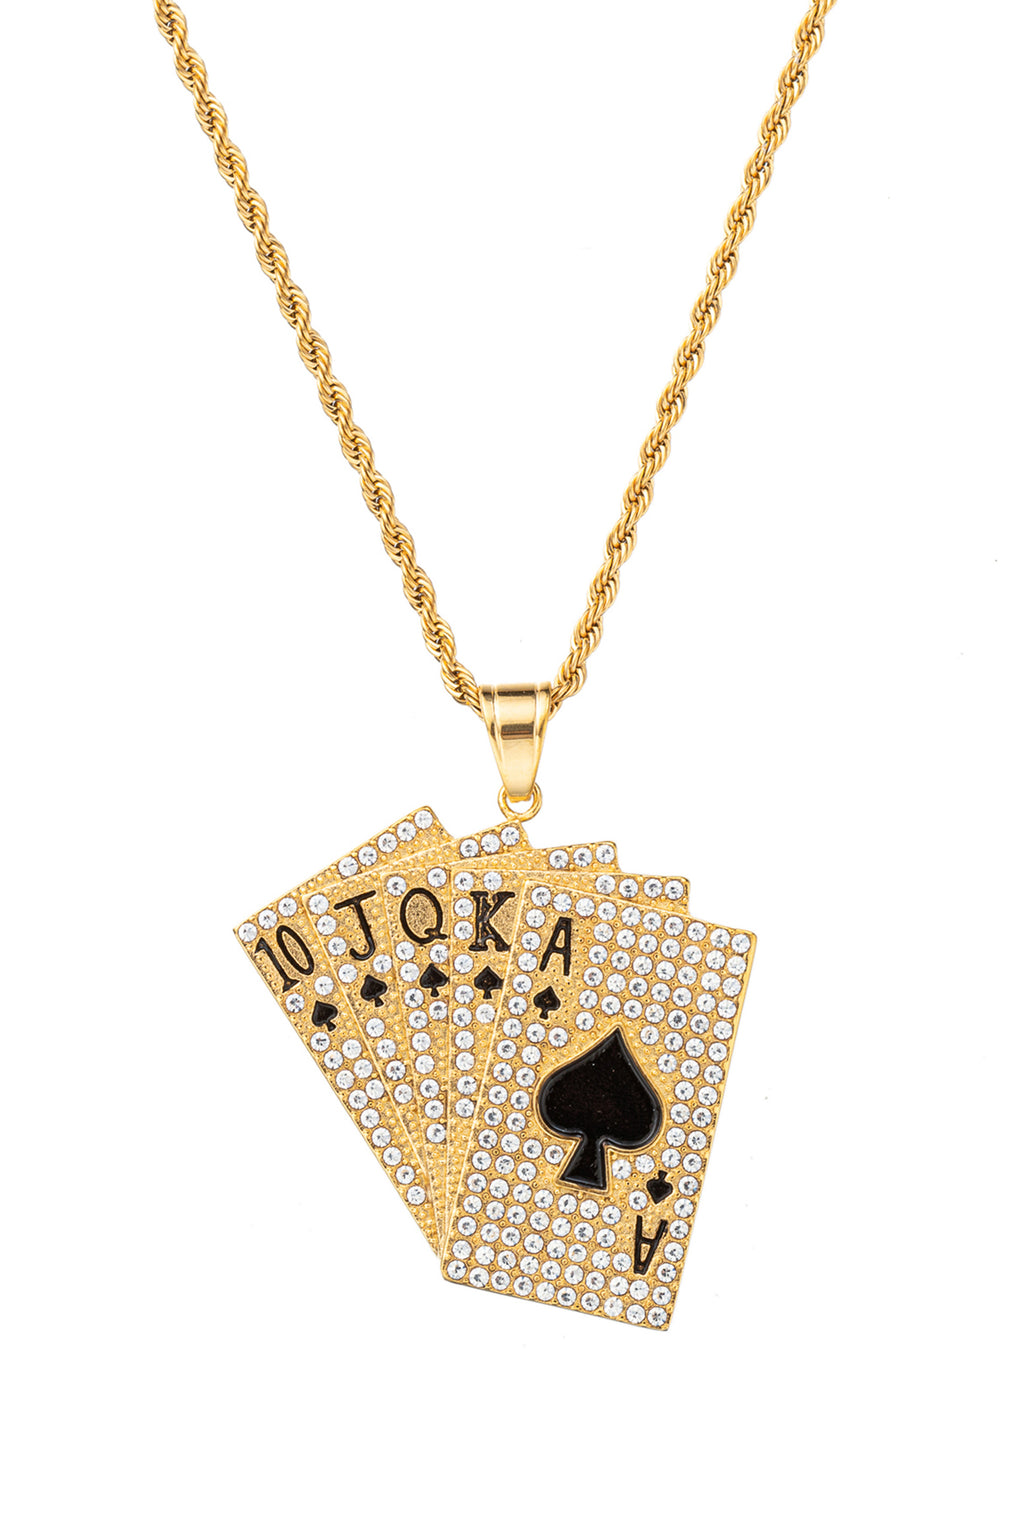 Gold tone titanium royal flush cards pendant studded with CZ crystals.